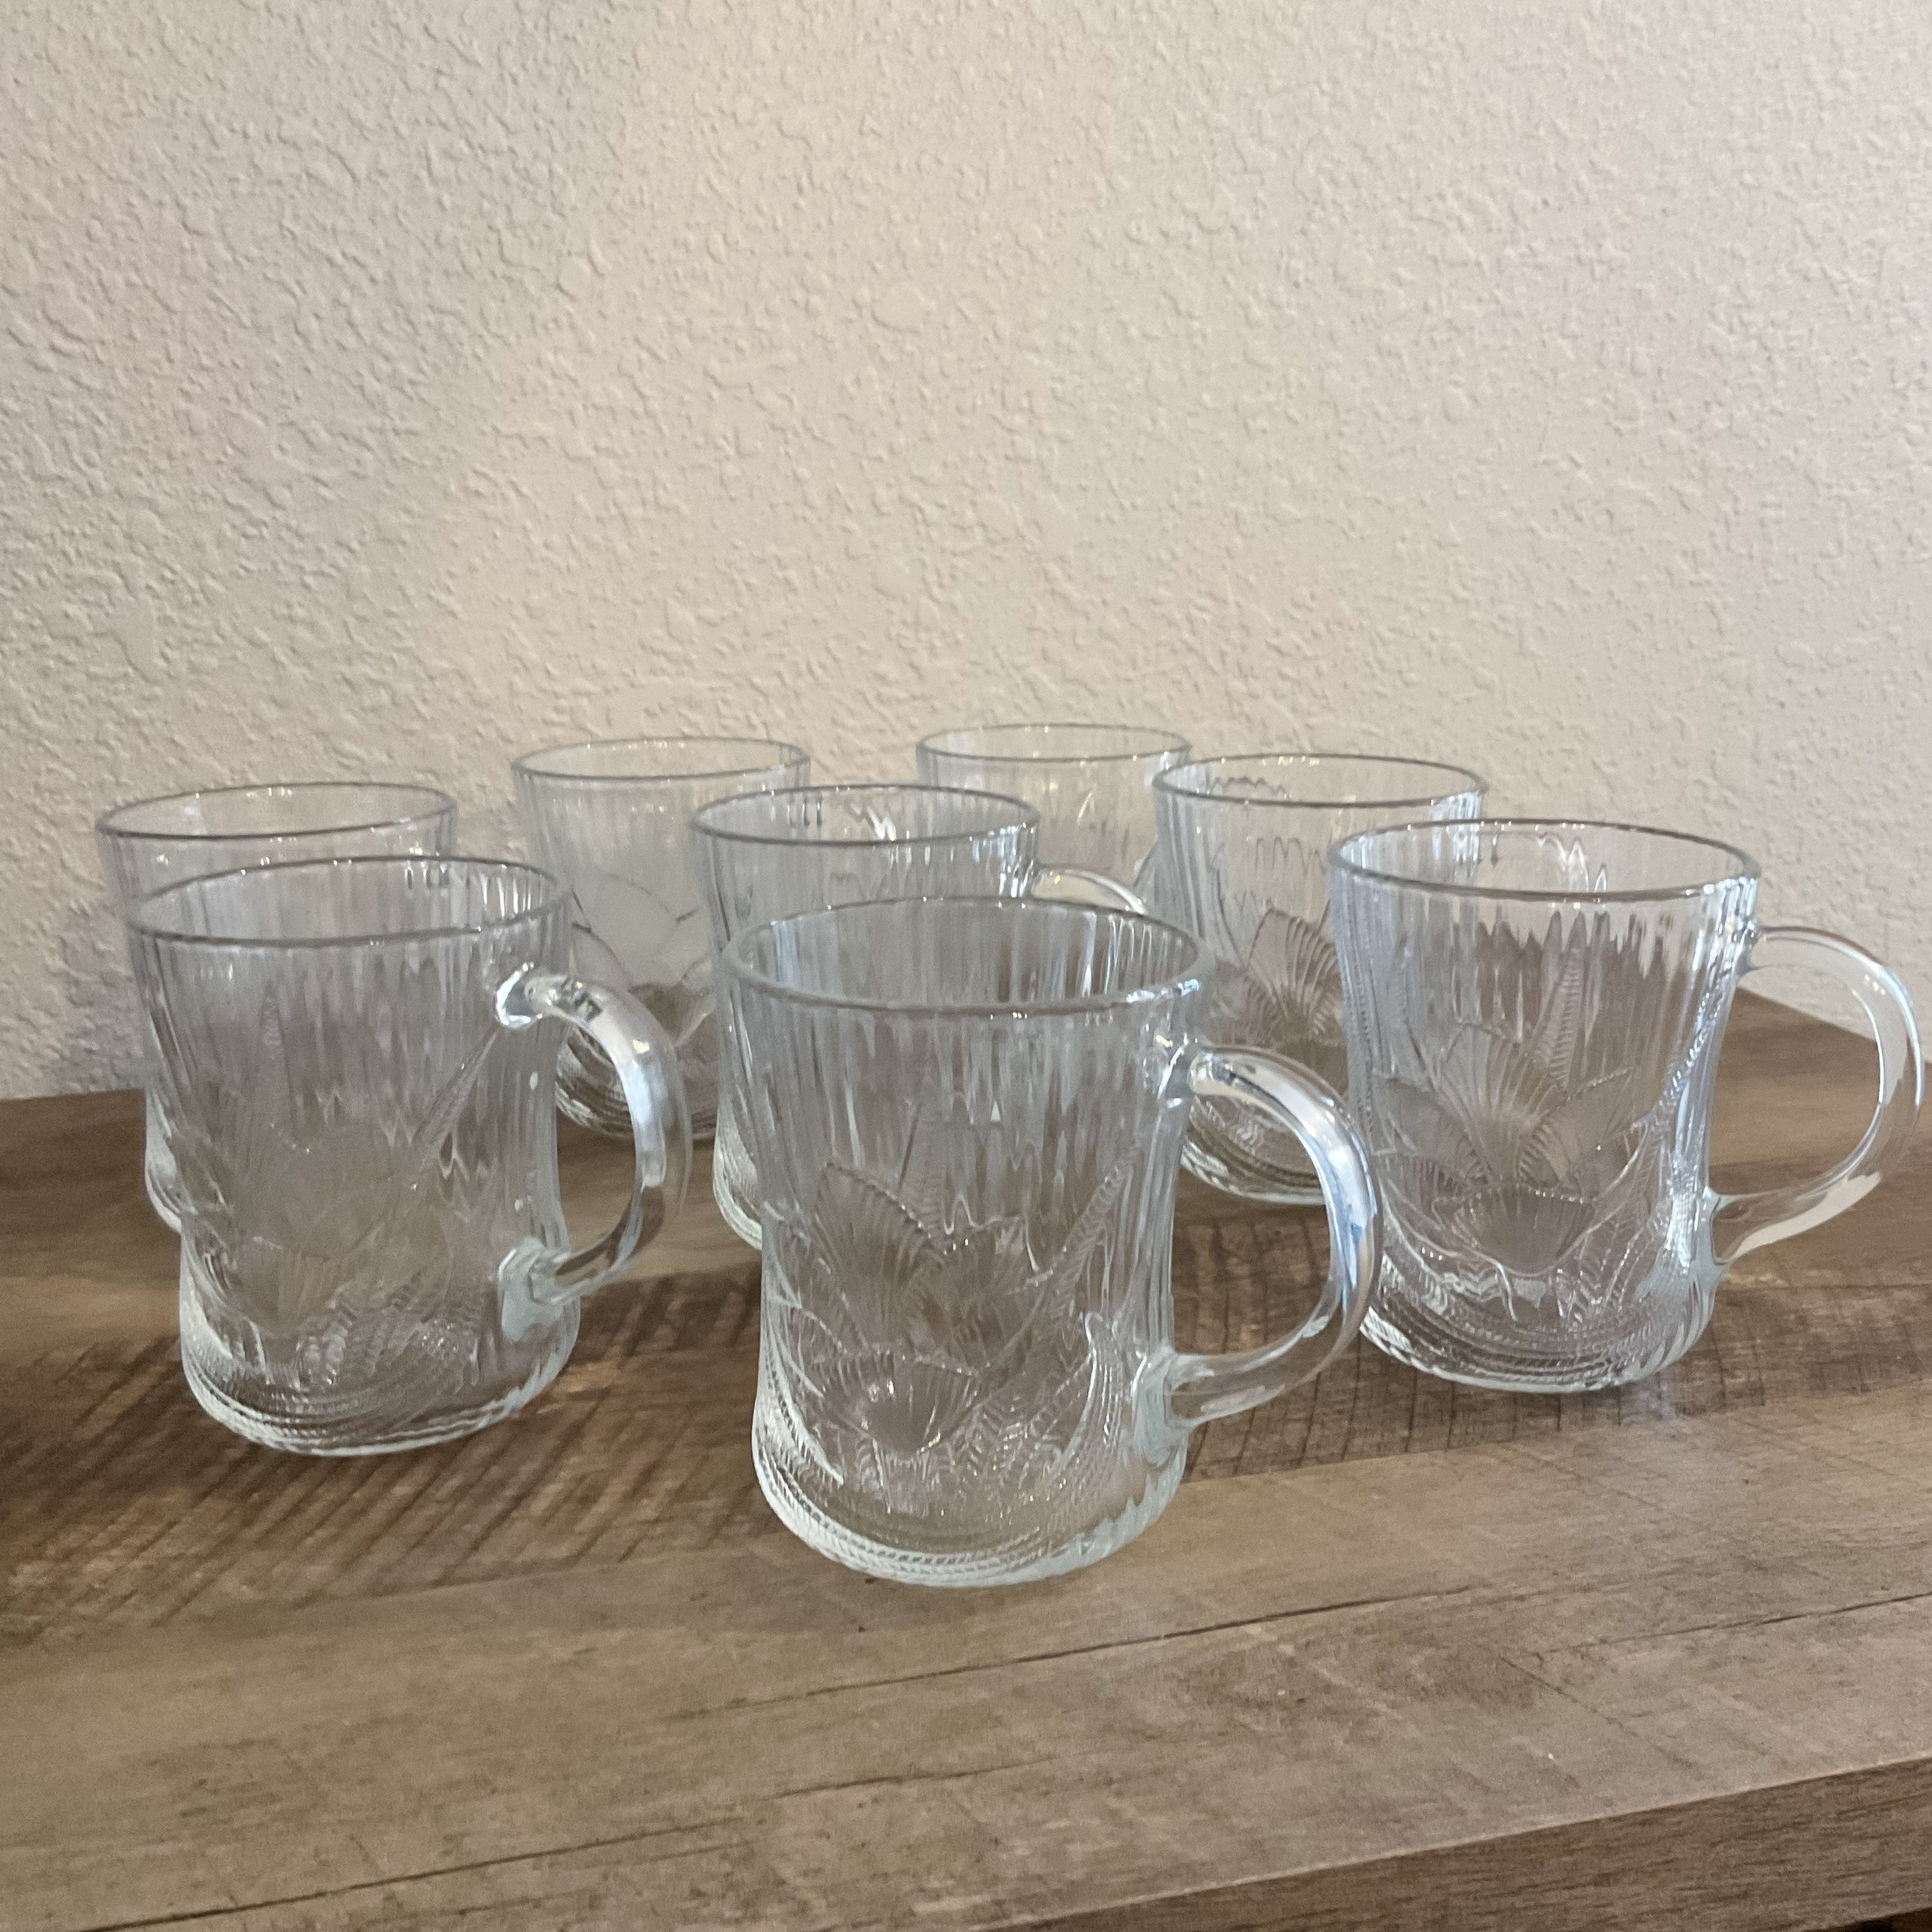  megarte Vintage Glass Coffee Mugs - 14 Oz Embossed